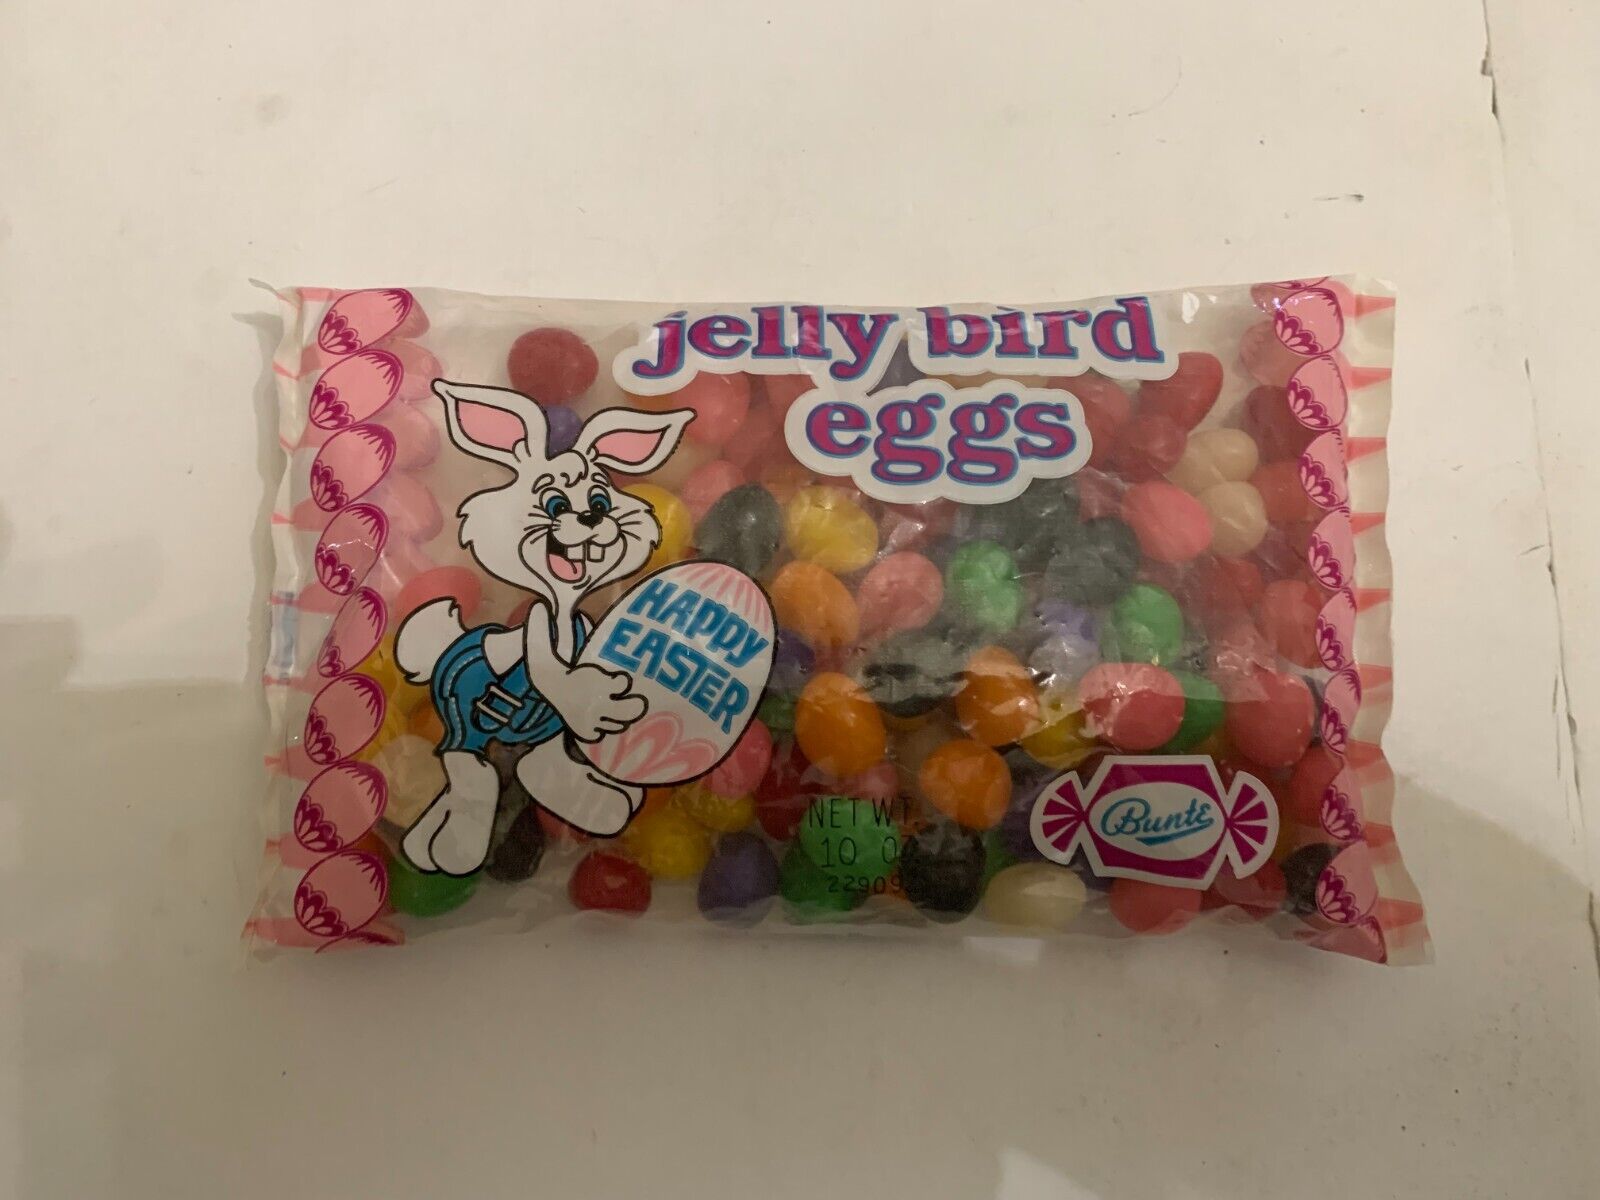 Vintage c.1990's Bunte Jelly Bird Eggs Easter Candy 10 oz. Unused